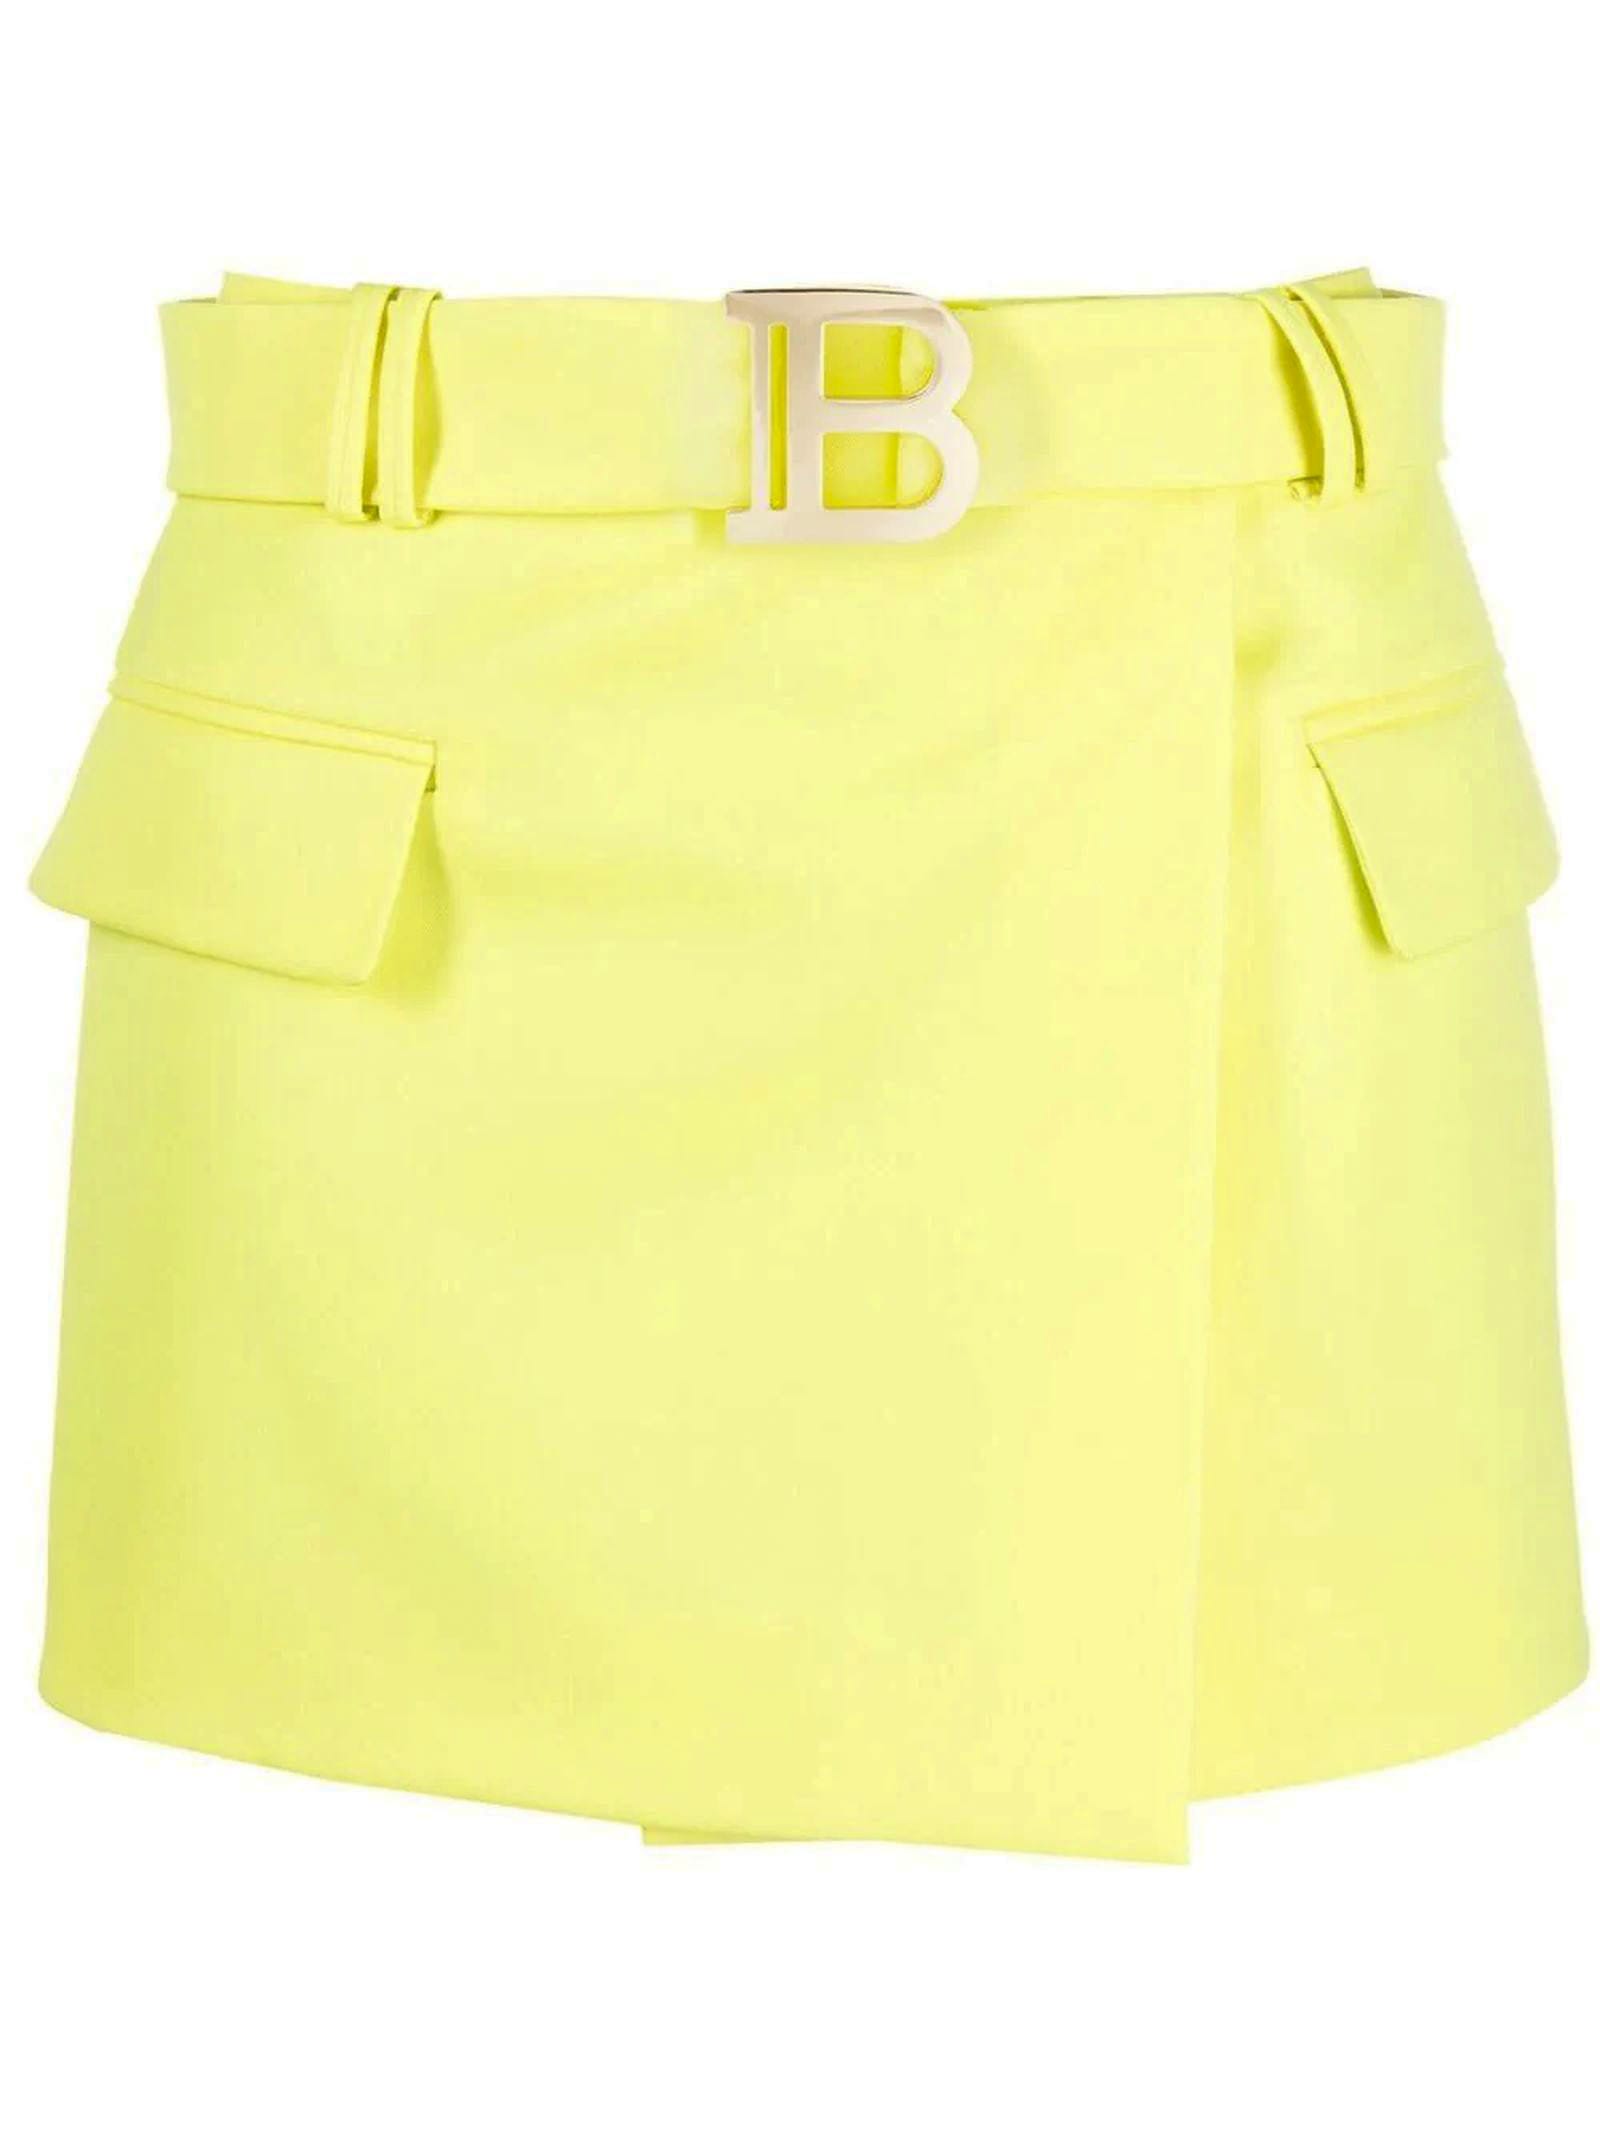 Balmain Short Lime Green Grain De Poudre Fabric Skirt